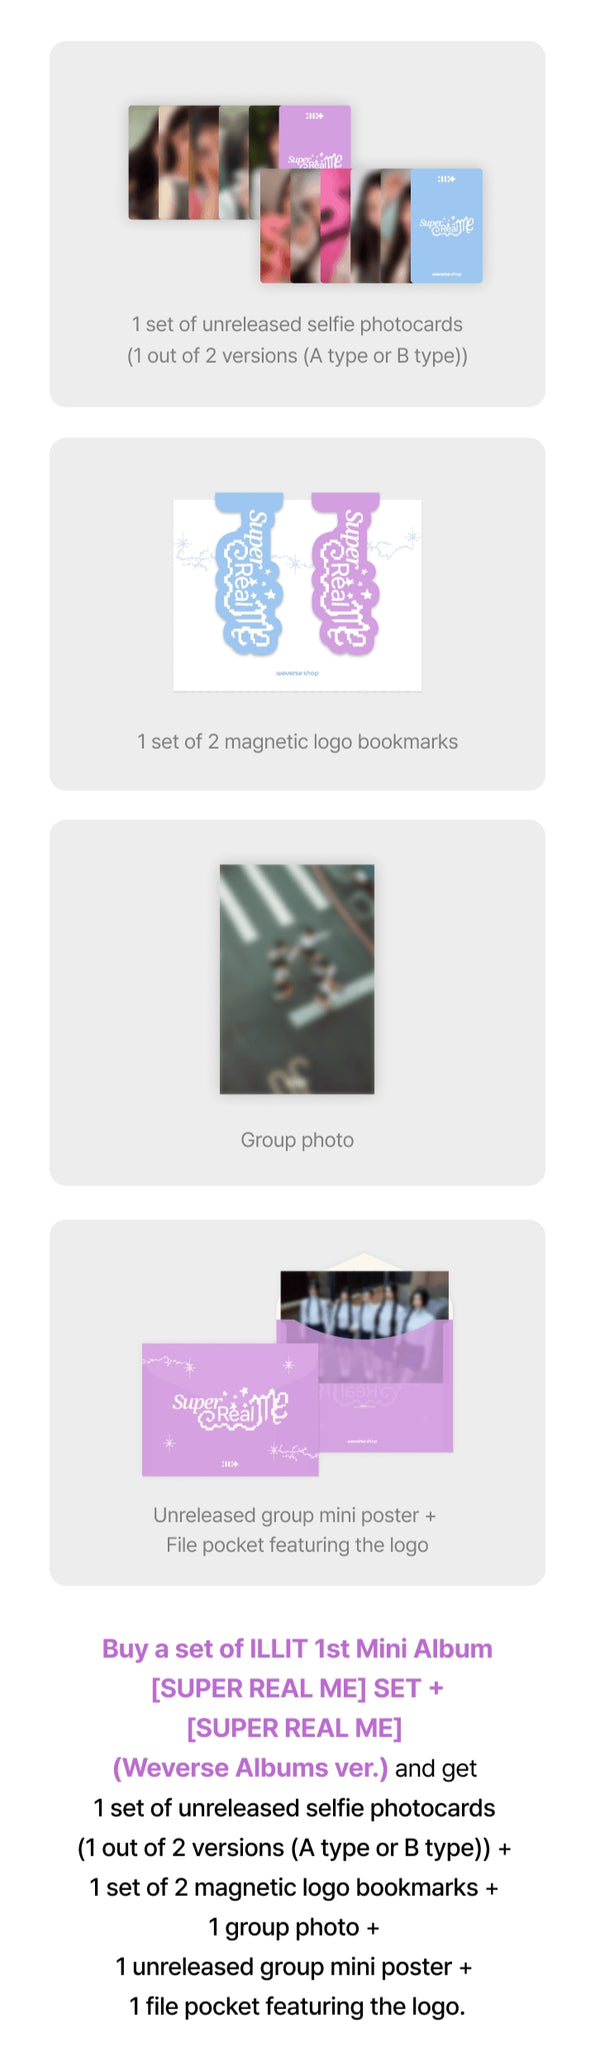 ILLIT 1st Mini Album SUPER REAL ME Weverse Pre-order Benefits: Selfie Photocard, Holographic Selfie Photocard, Magnetic Logo Bookmark, Group Photo, Group Mini Poster, File Pocket